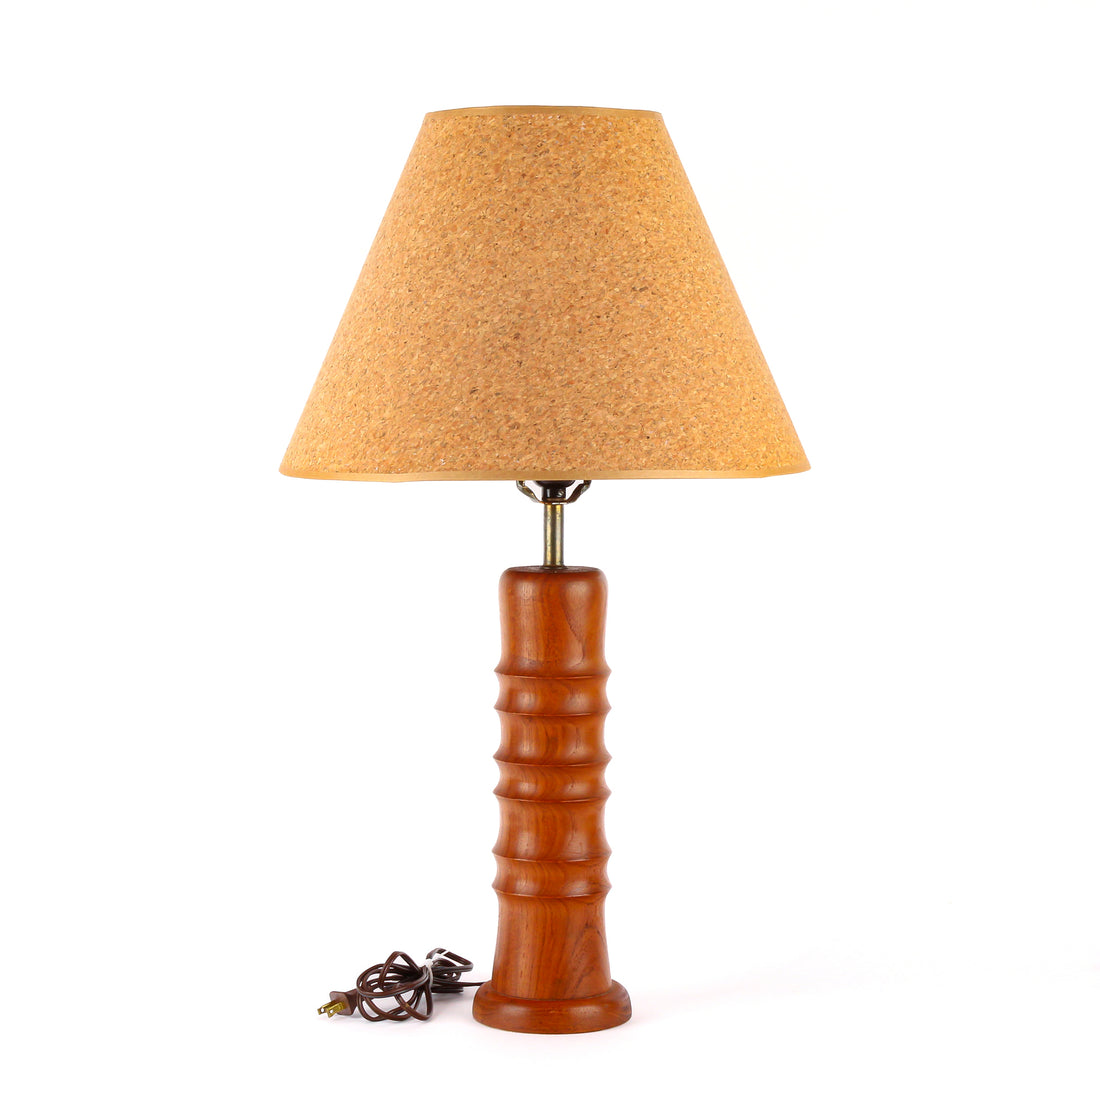 Vintage Turned Teak Table Lamp with Cork Shade